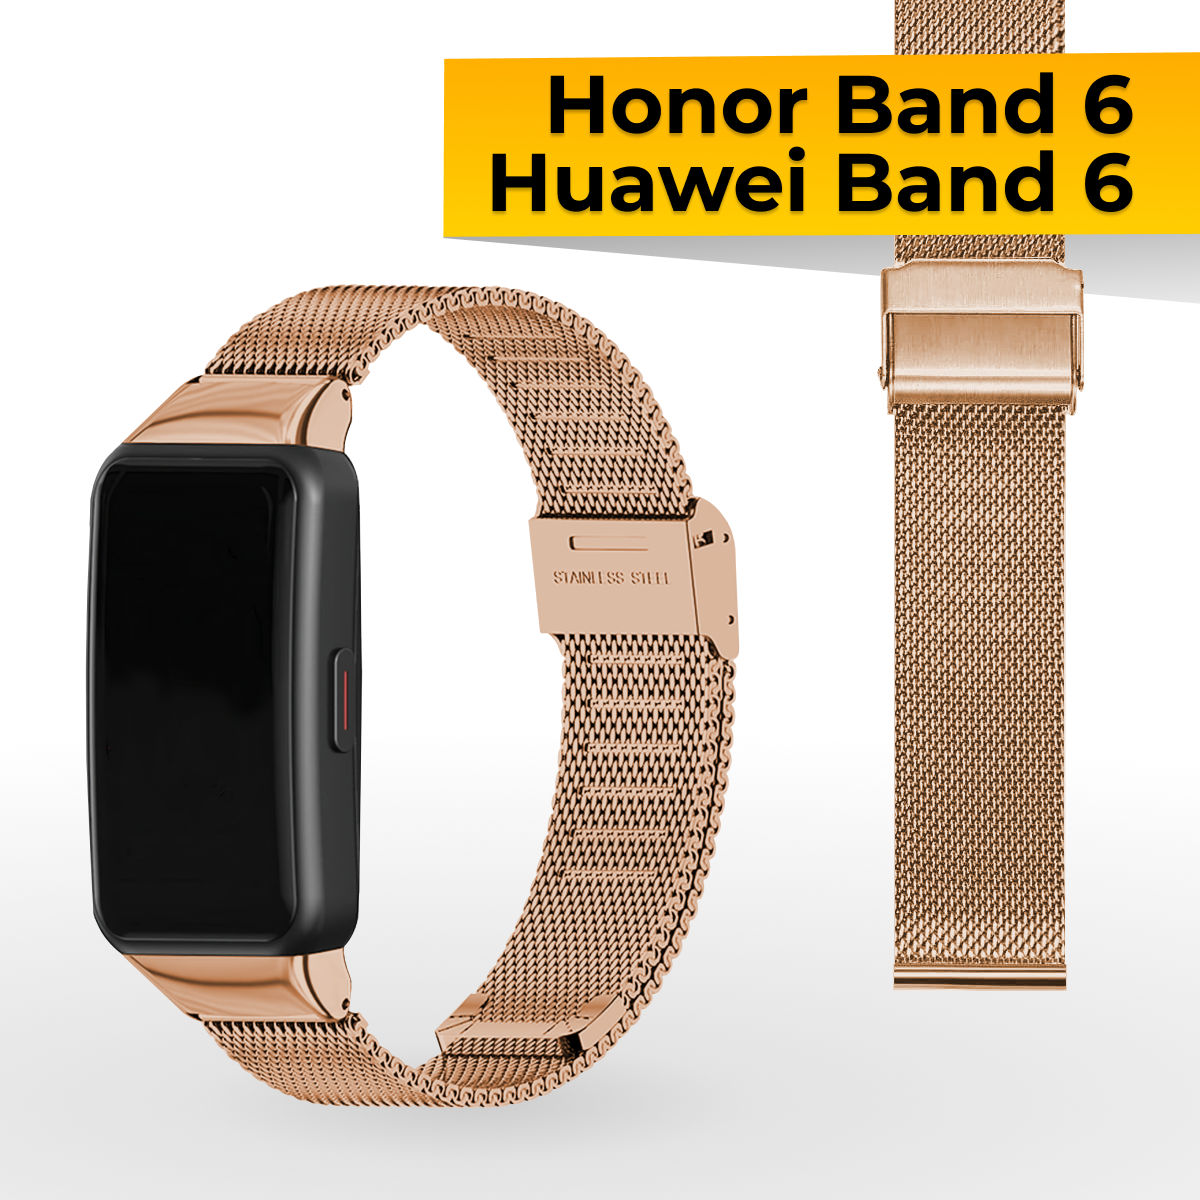 Металлический ремешок для фитнес-браслета Honor Band 6 и Huawei Band 6 / Браслет миланская петля на смарт часы Хонор Бэнд 6 и Хуавей Бэнд 6 / Бронза